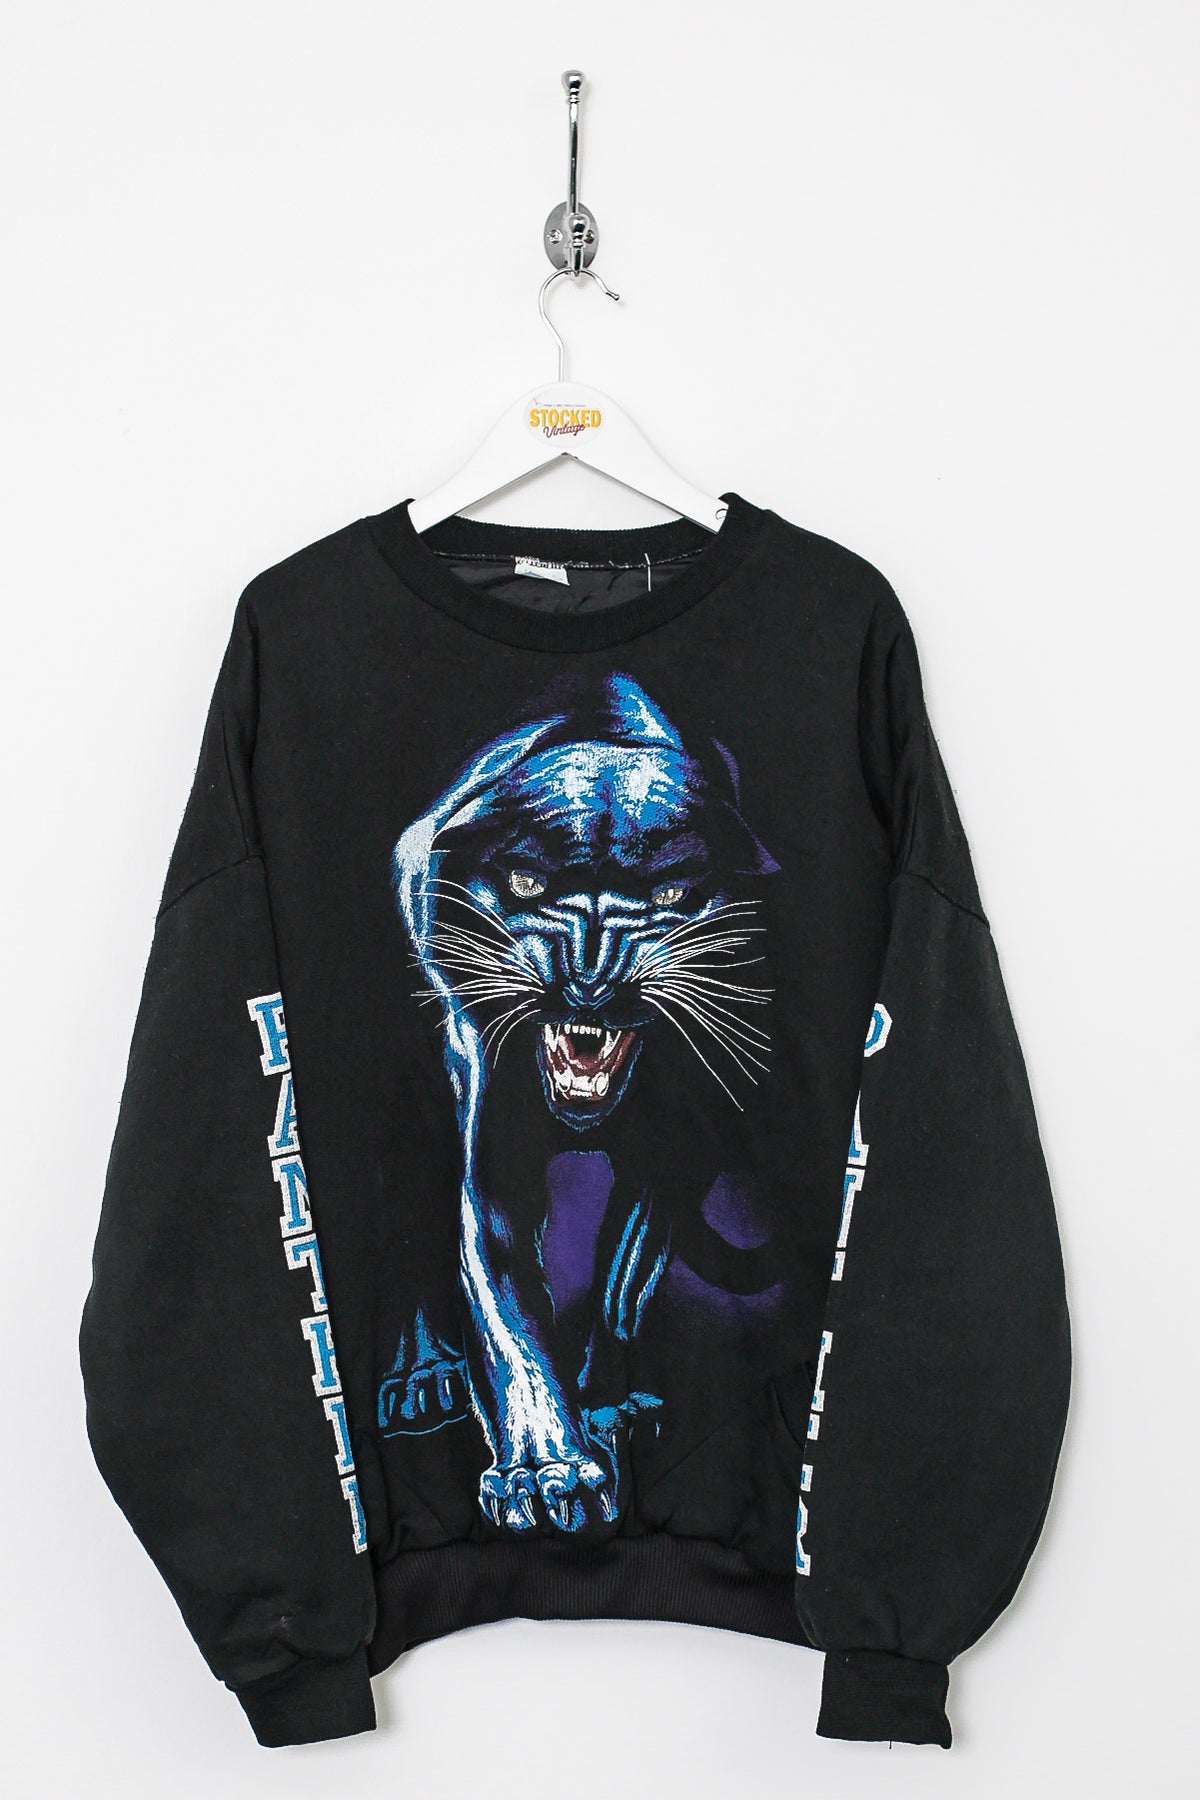 90s NFL Carolina Panthers Graphic Sweatshirt (L)